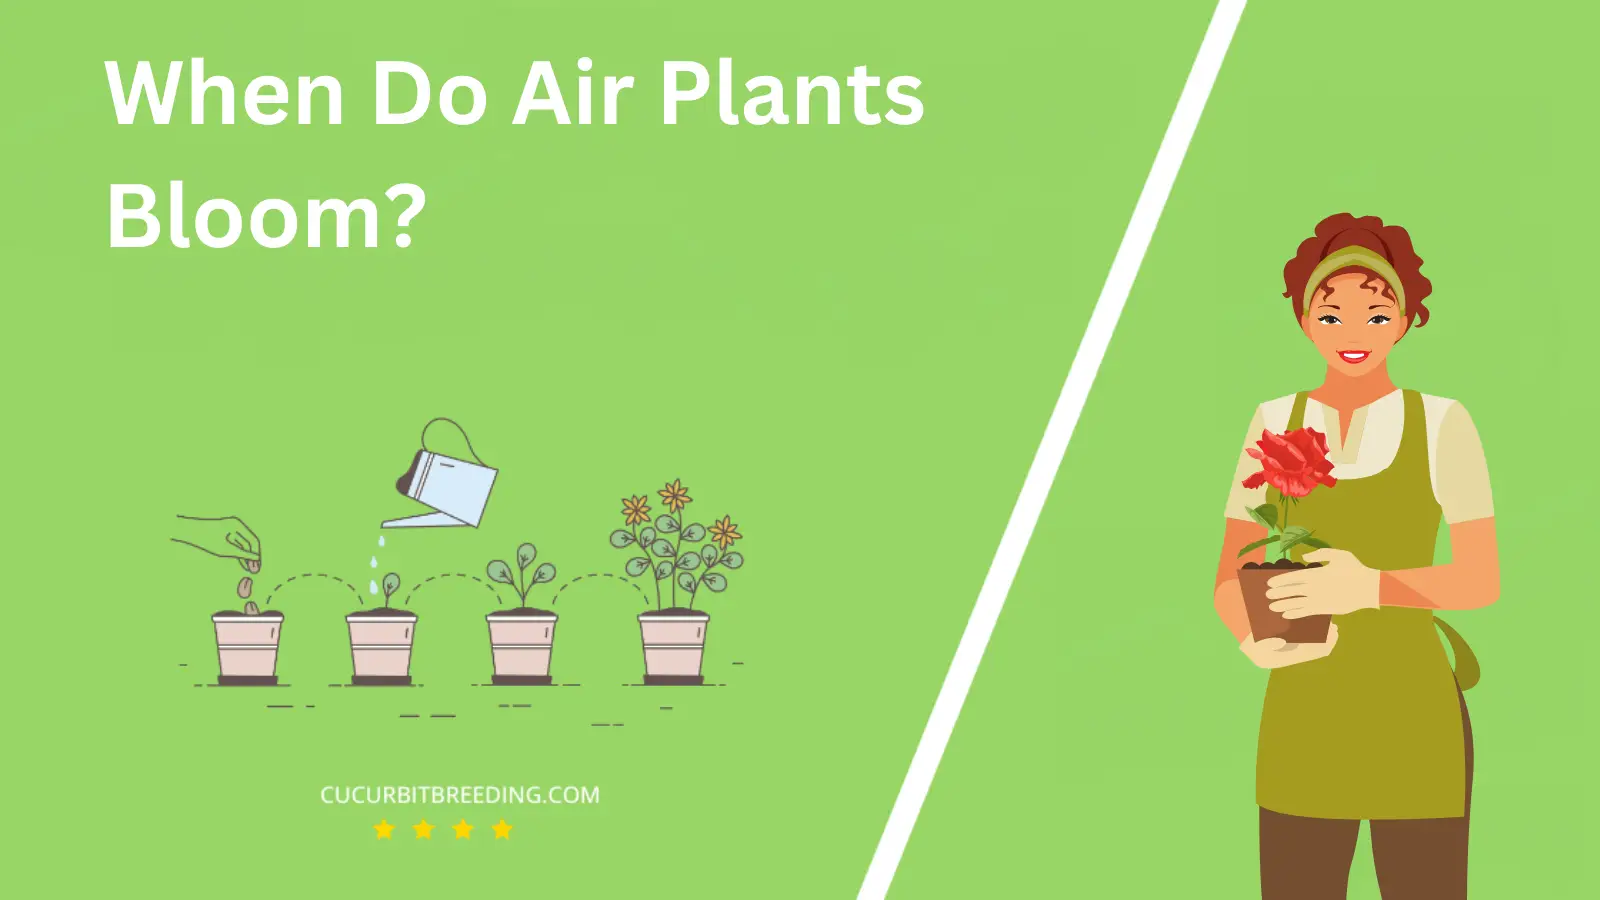 When Do Air Plants Bloom?